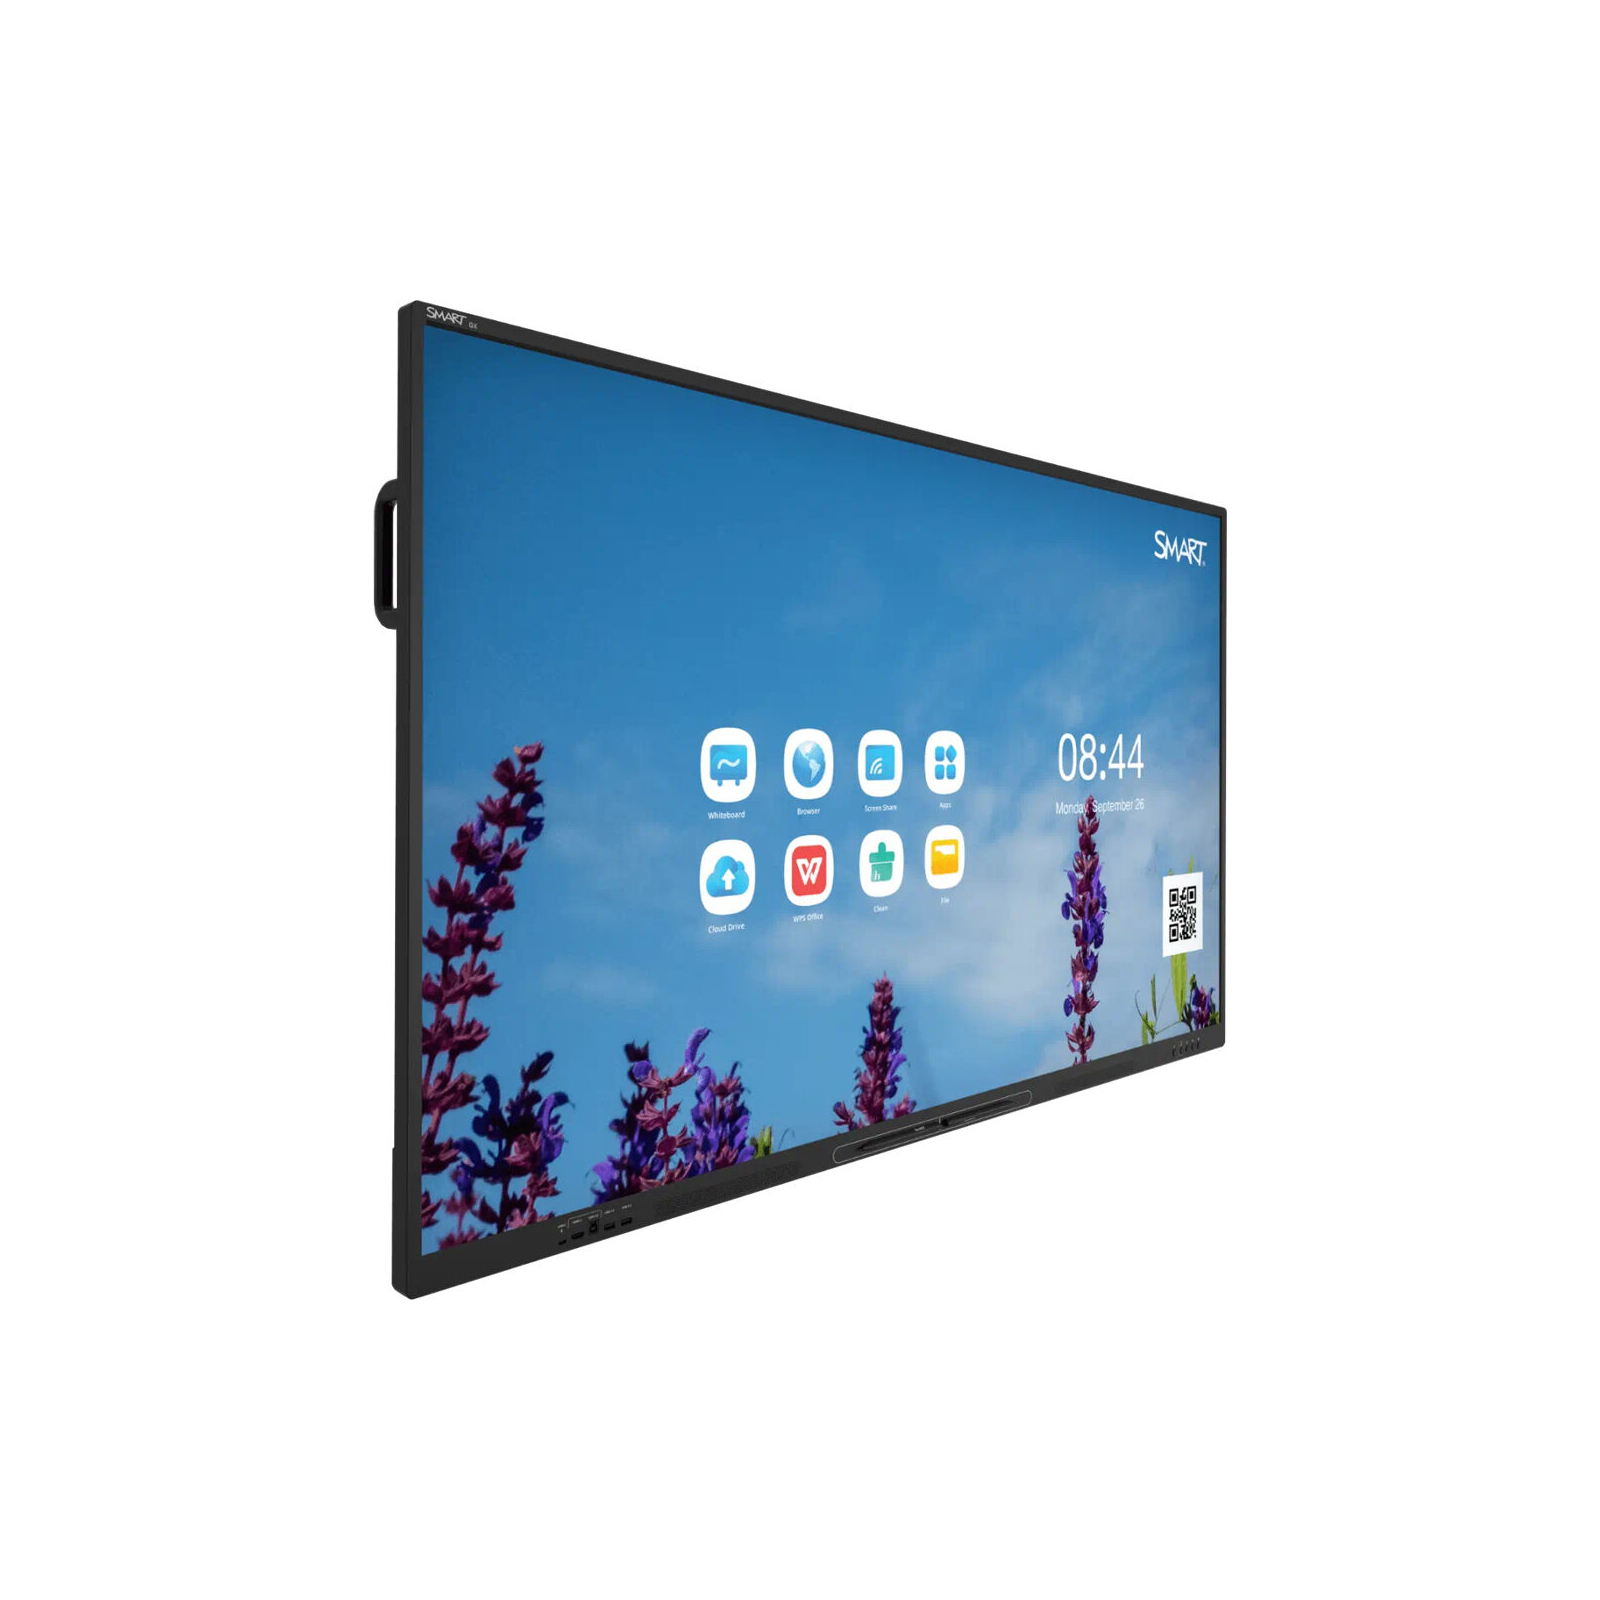 LCD панель Smart GX165-V3 изображение 2